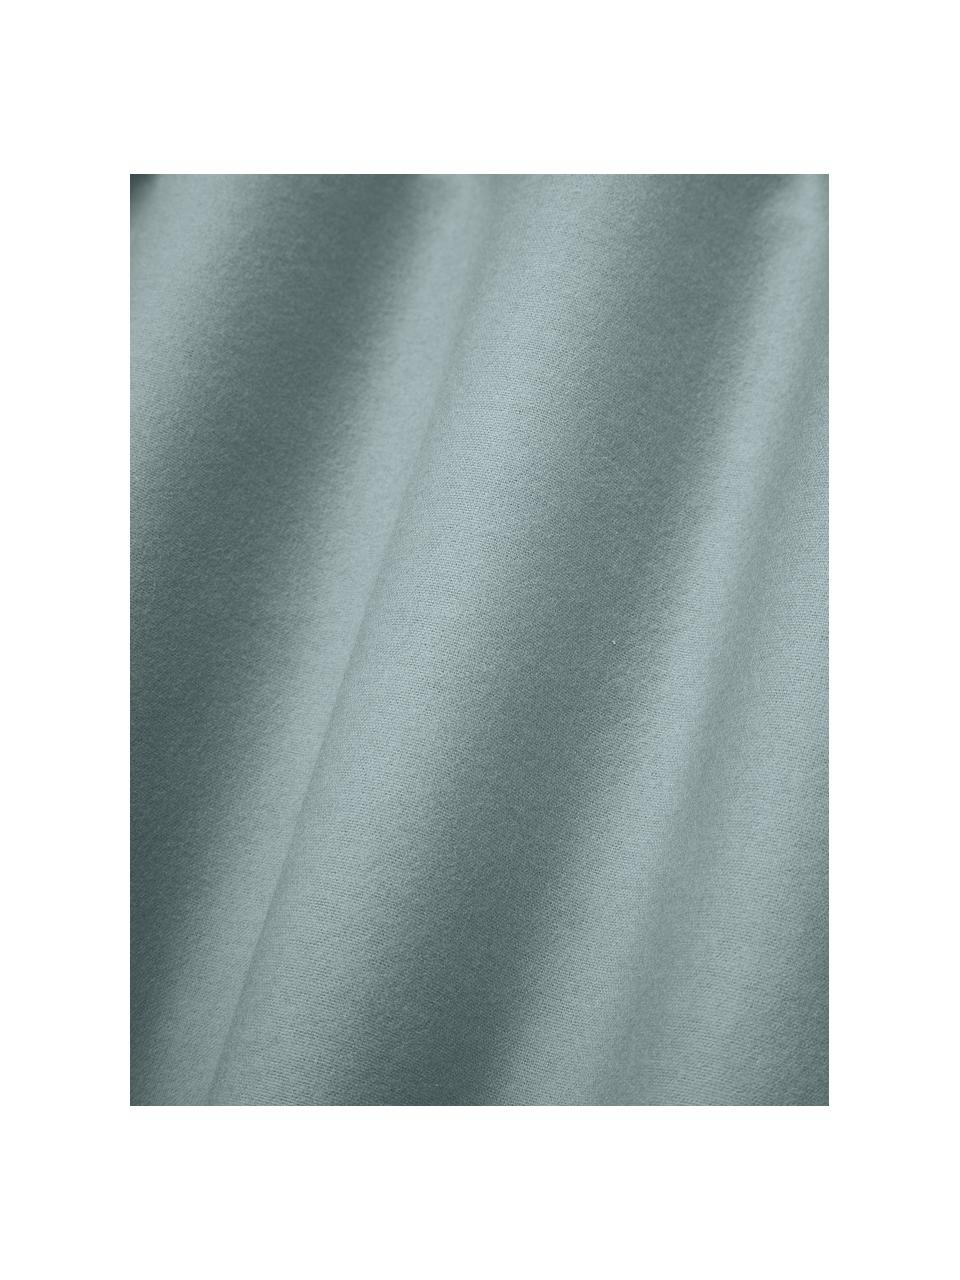 Topper-Spannbettlaken Biba aus Flanell in Graugrün, Webart: Flanell Flanell ist ein k, Graugrün, B 90 x L 200 cm